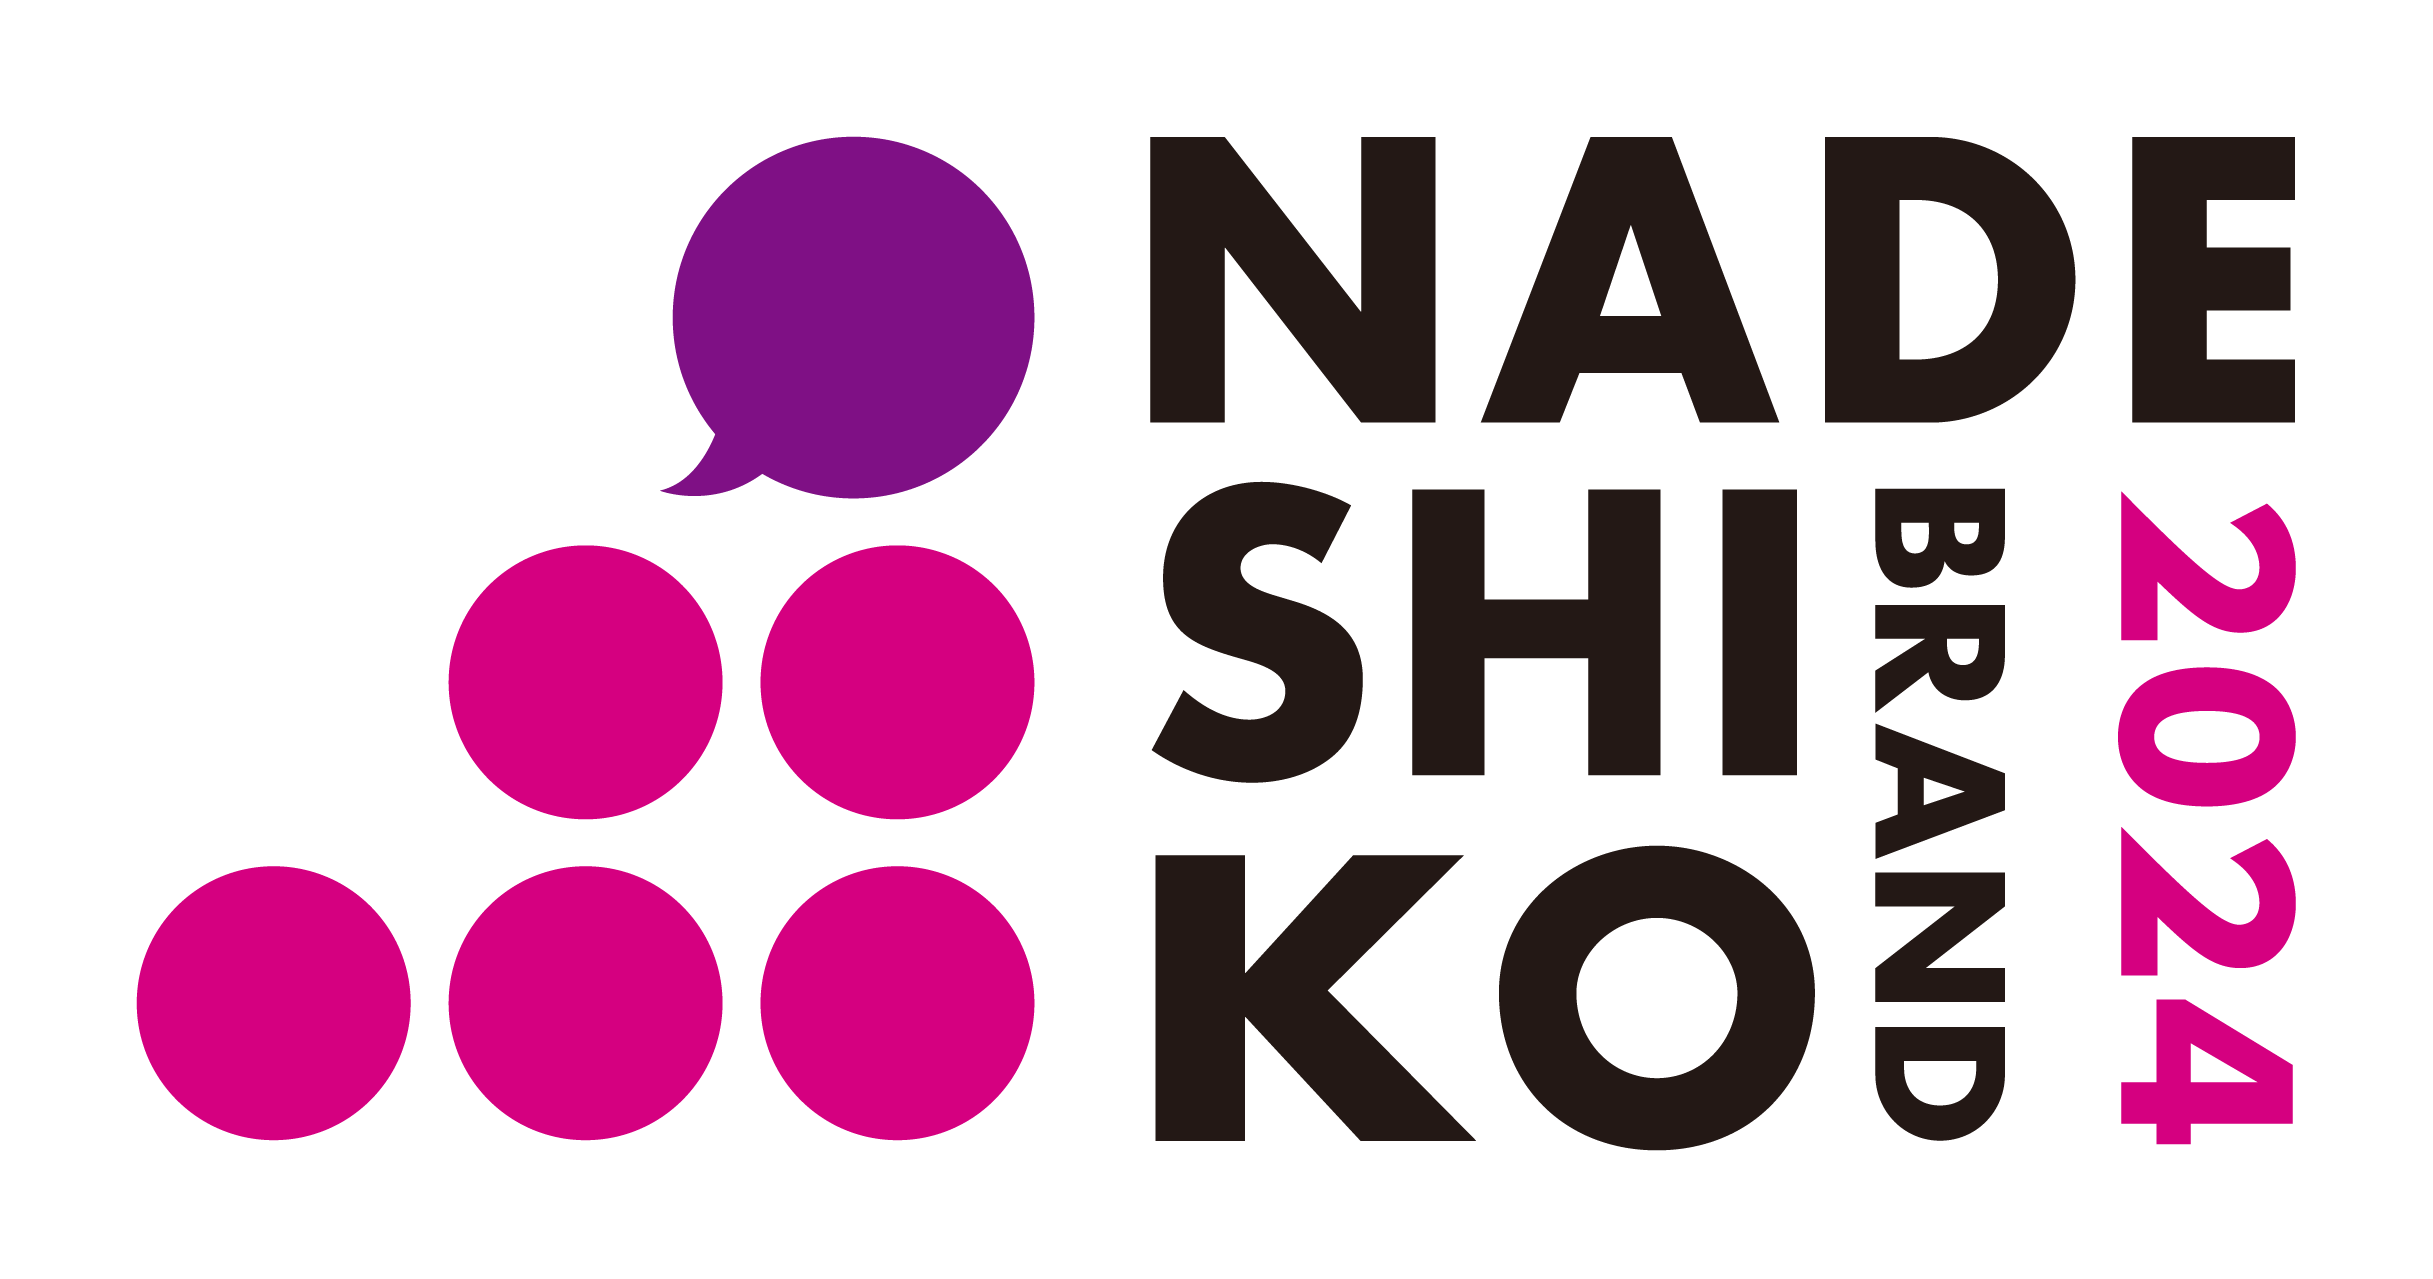 Selected as “Nadeshiko Brand”